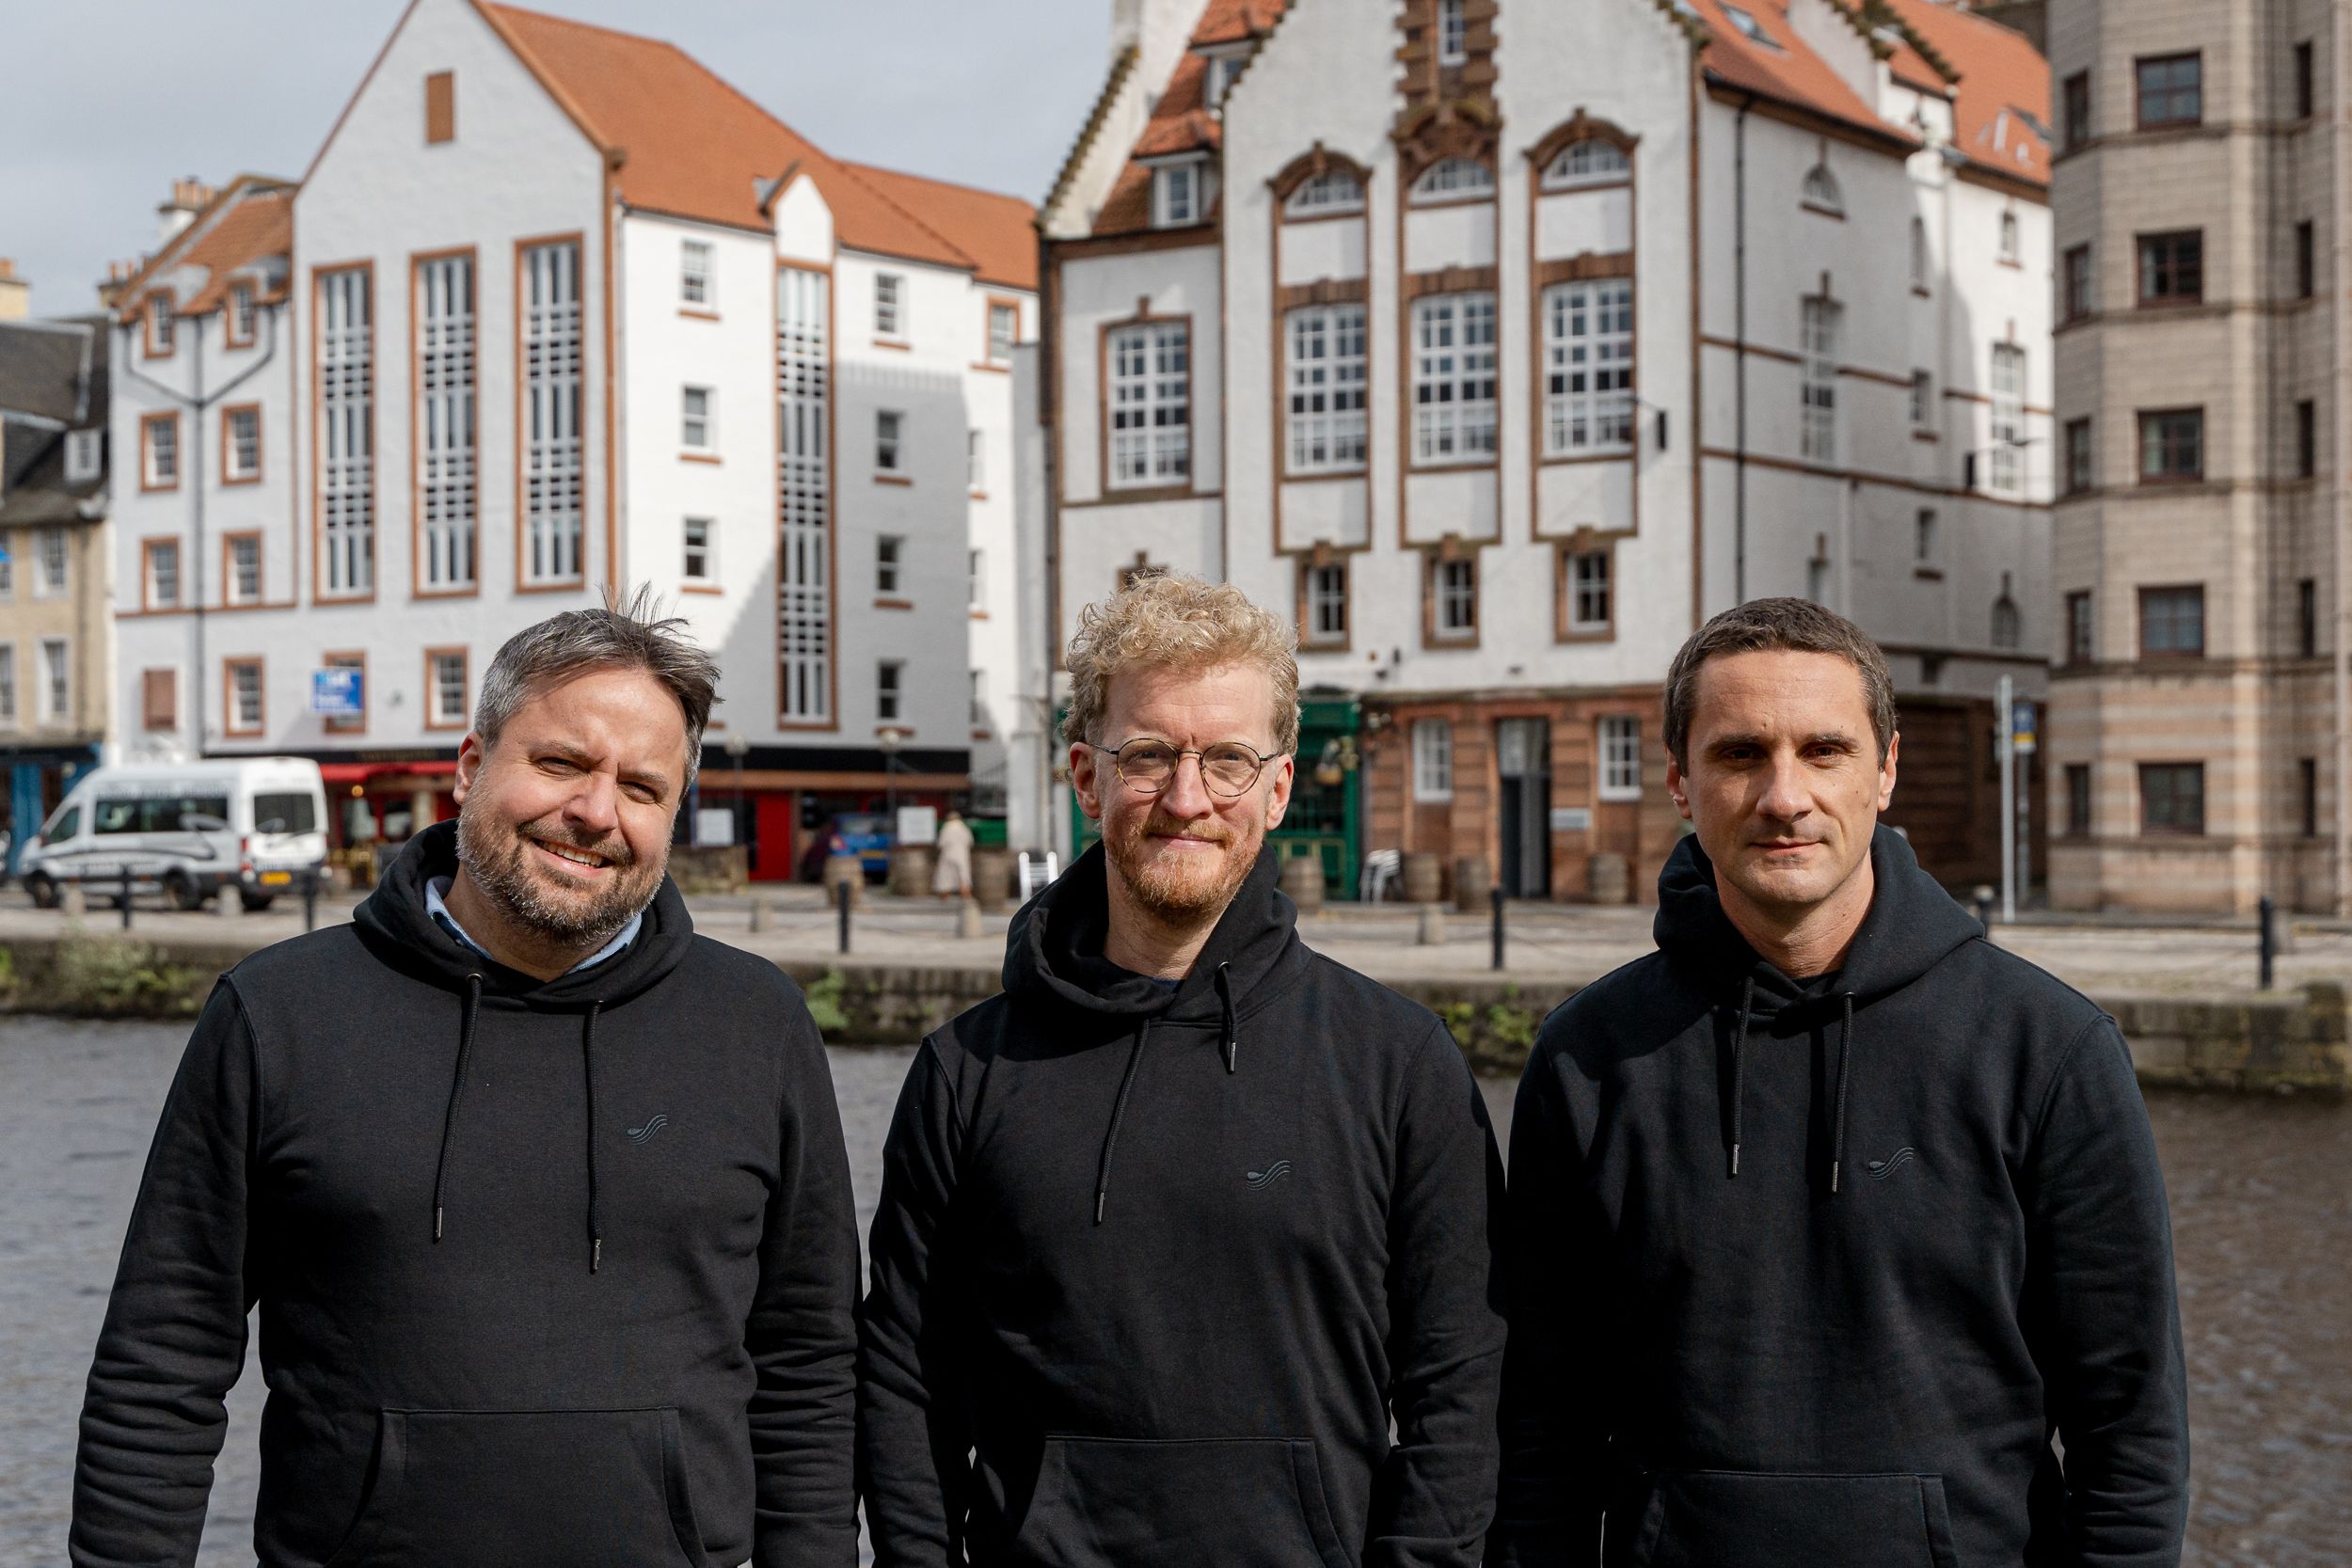 Wordsmith cofounders - Robbie Falkenthal (left), Ross McNairn (middle), Volodymyr Giginiak (right)